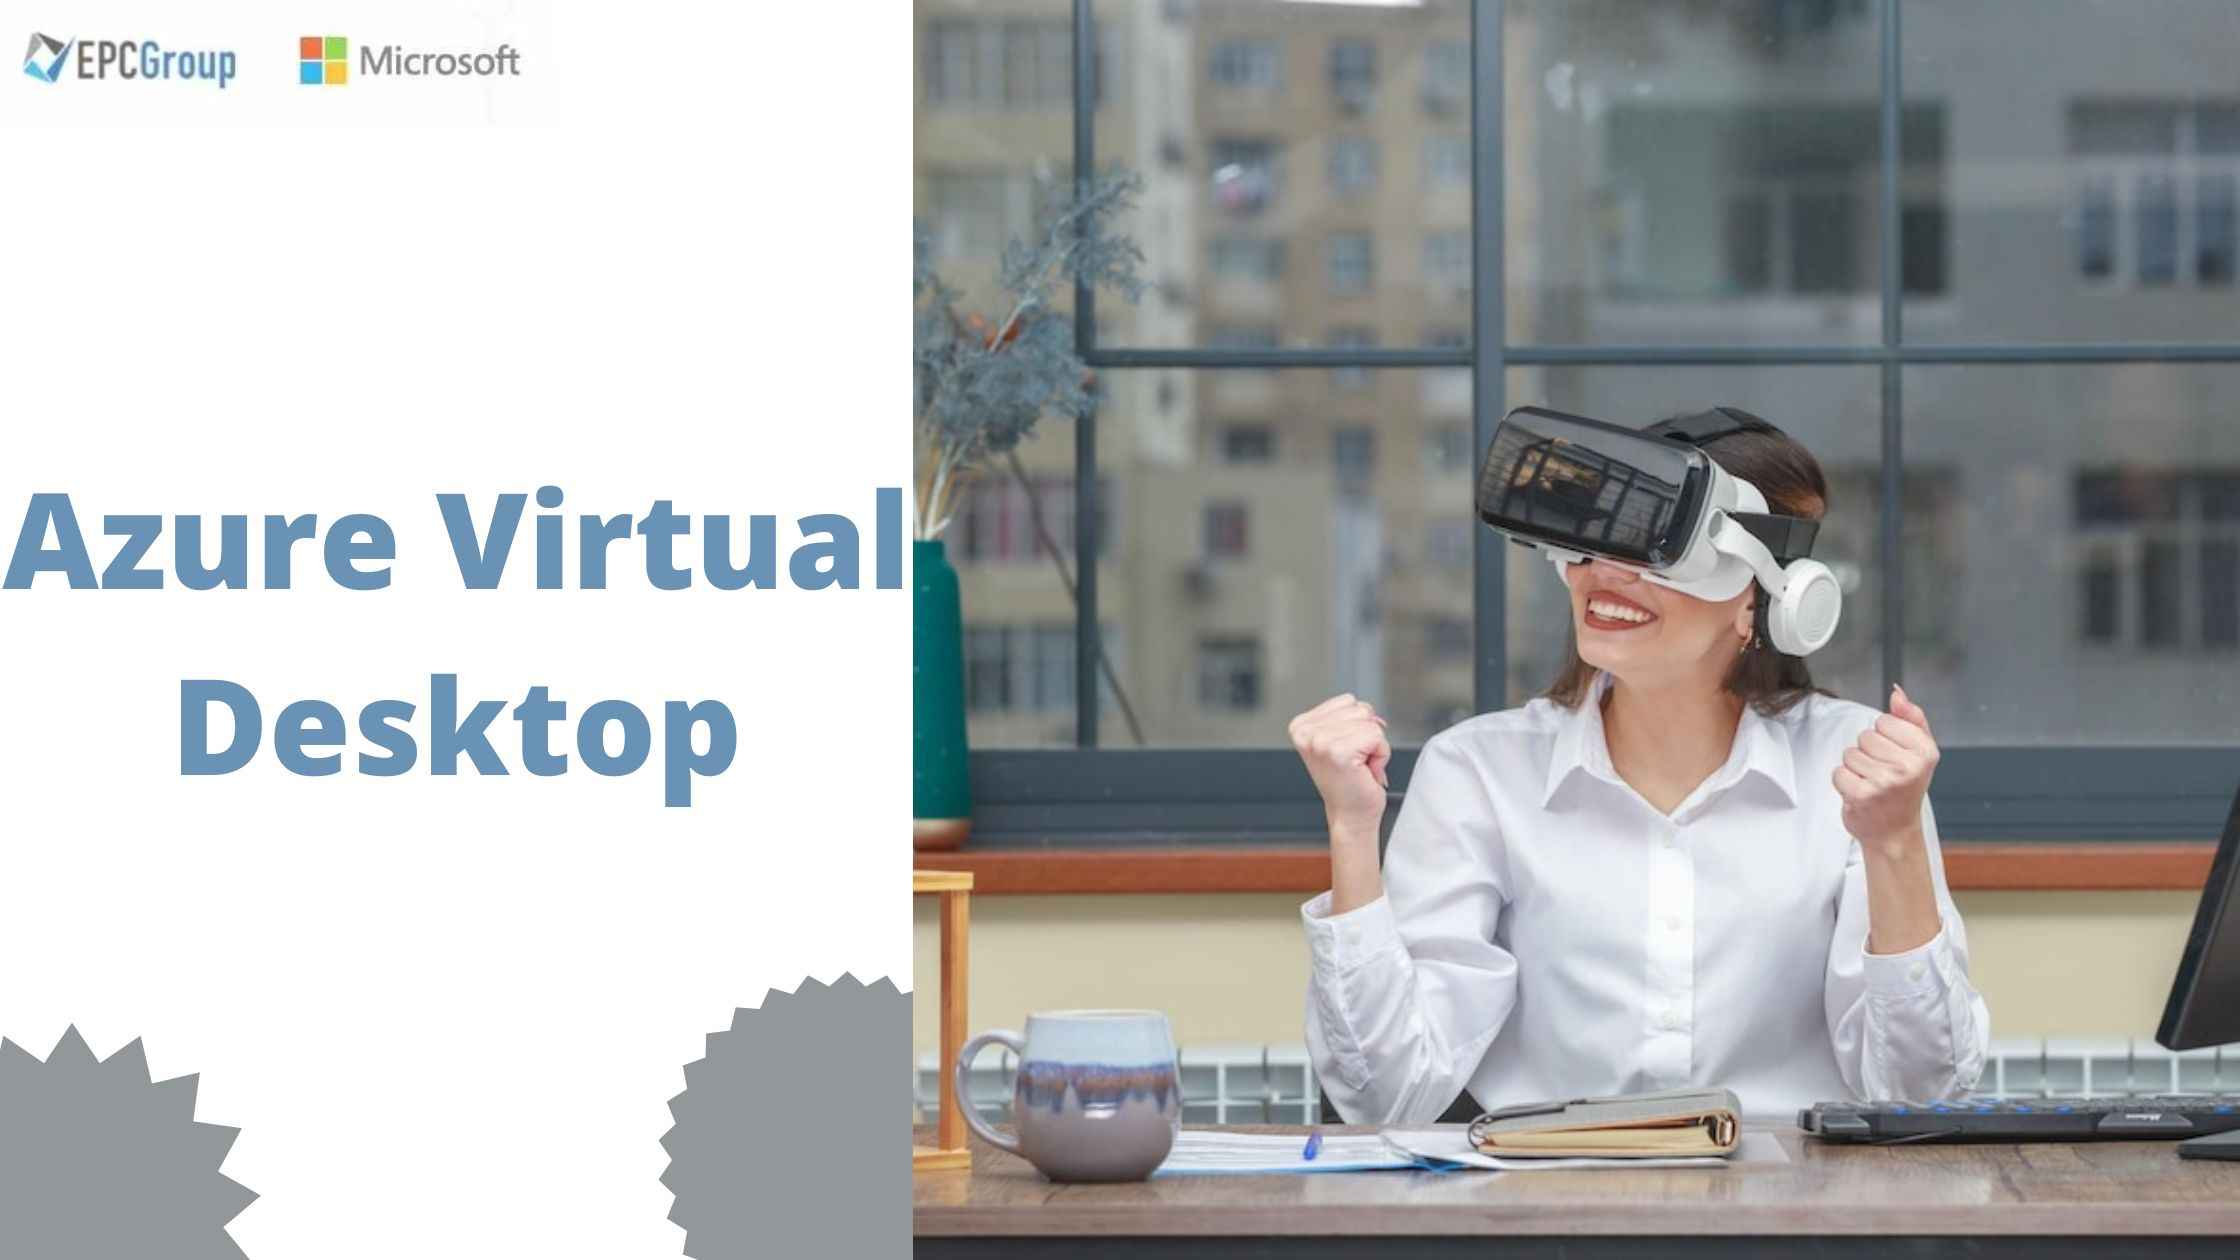 Simplify Your Desktop Experience With Azure Virtual Desktop